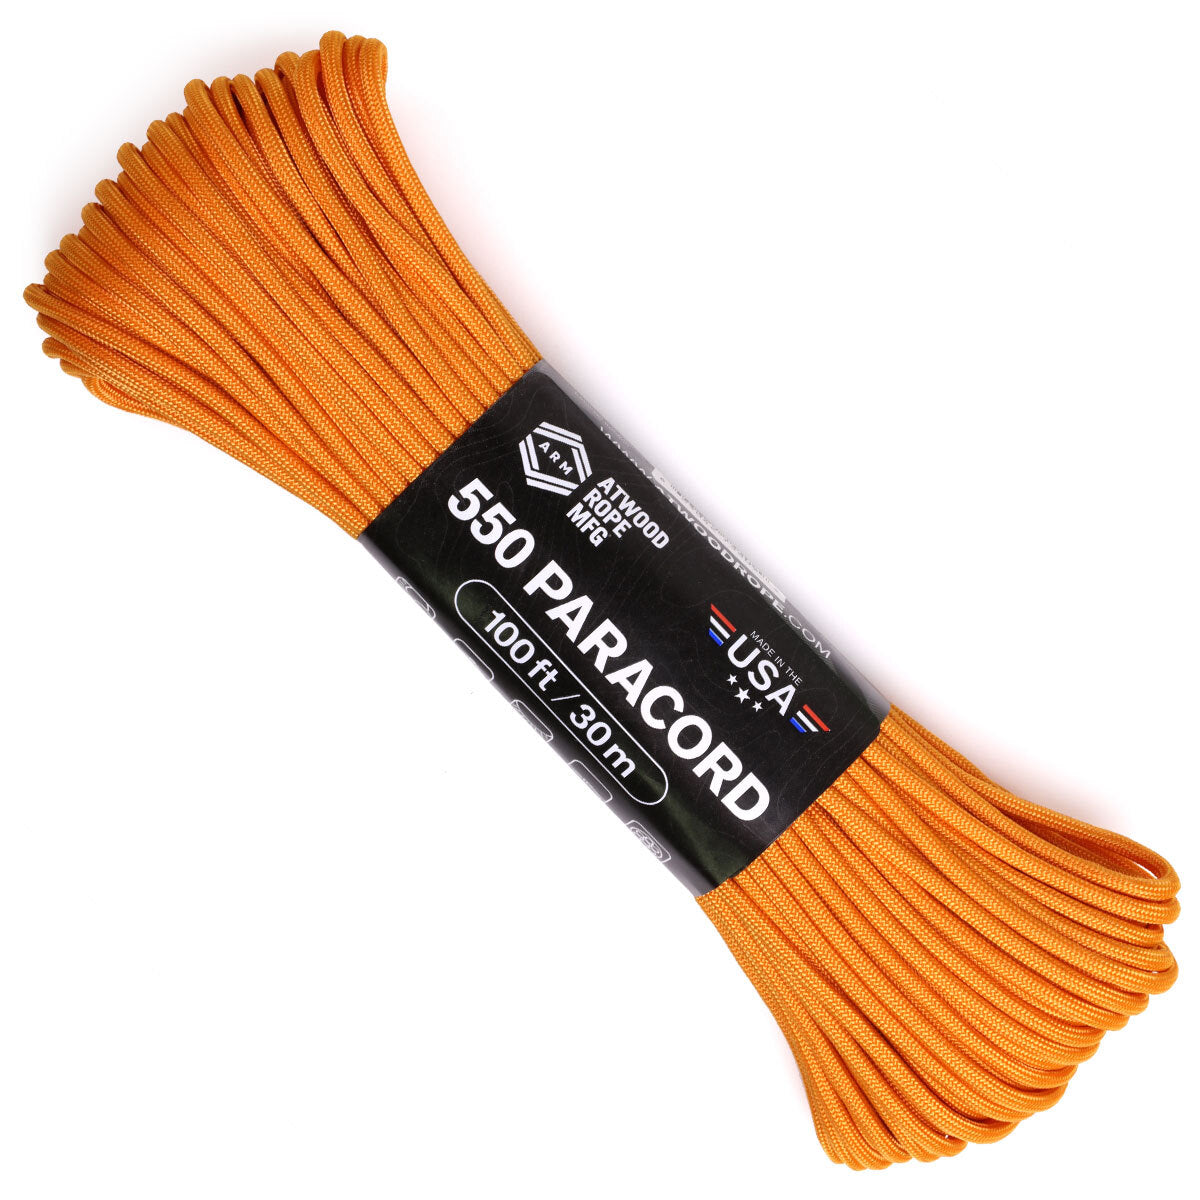 ARm Atwood Rope MFG 550 PARACORD 100ft/30m Orange 